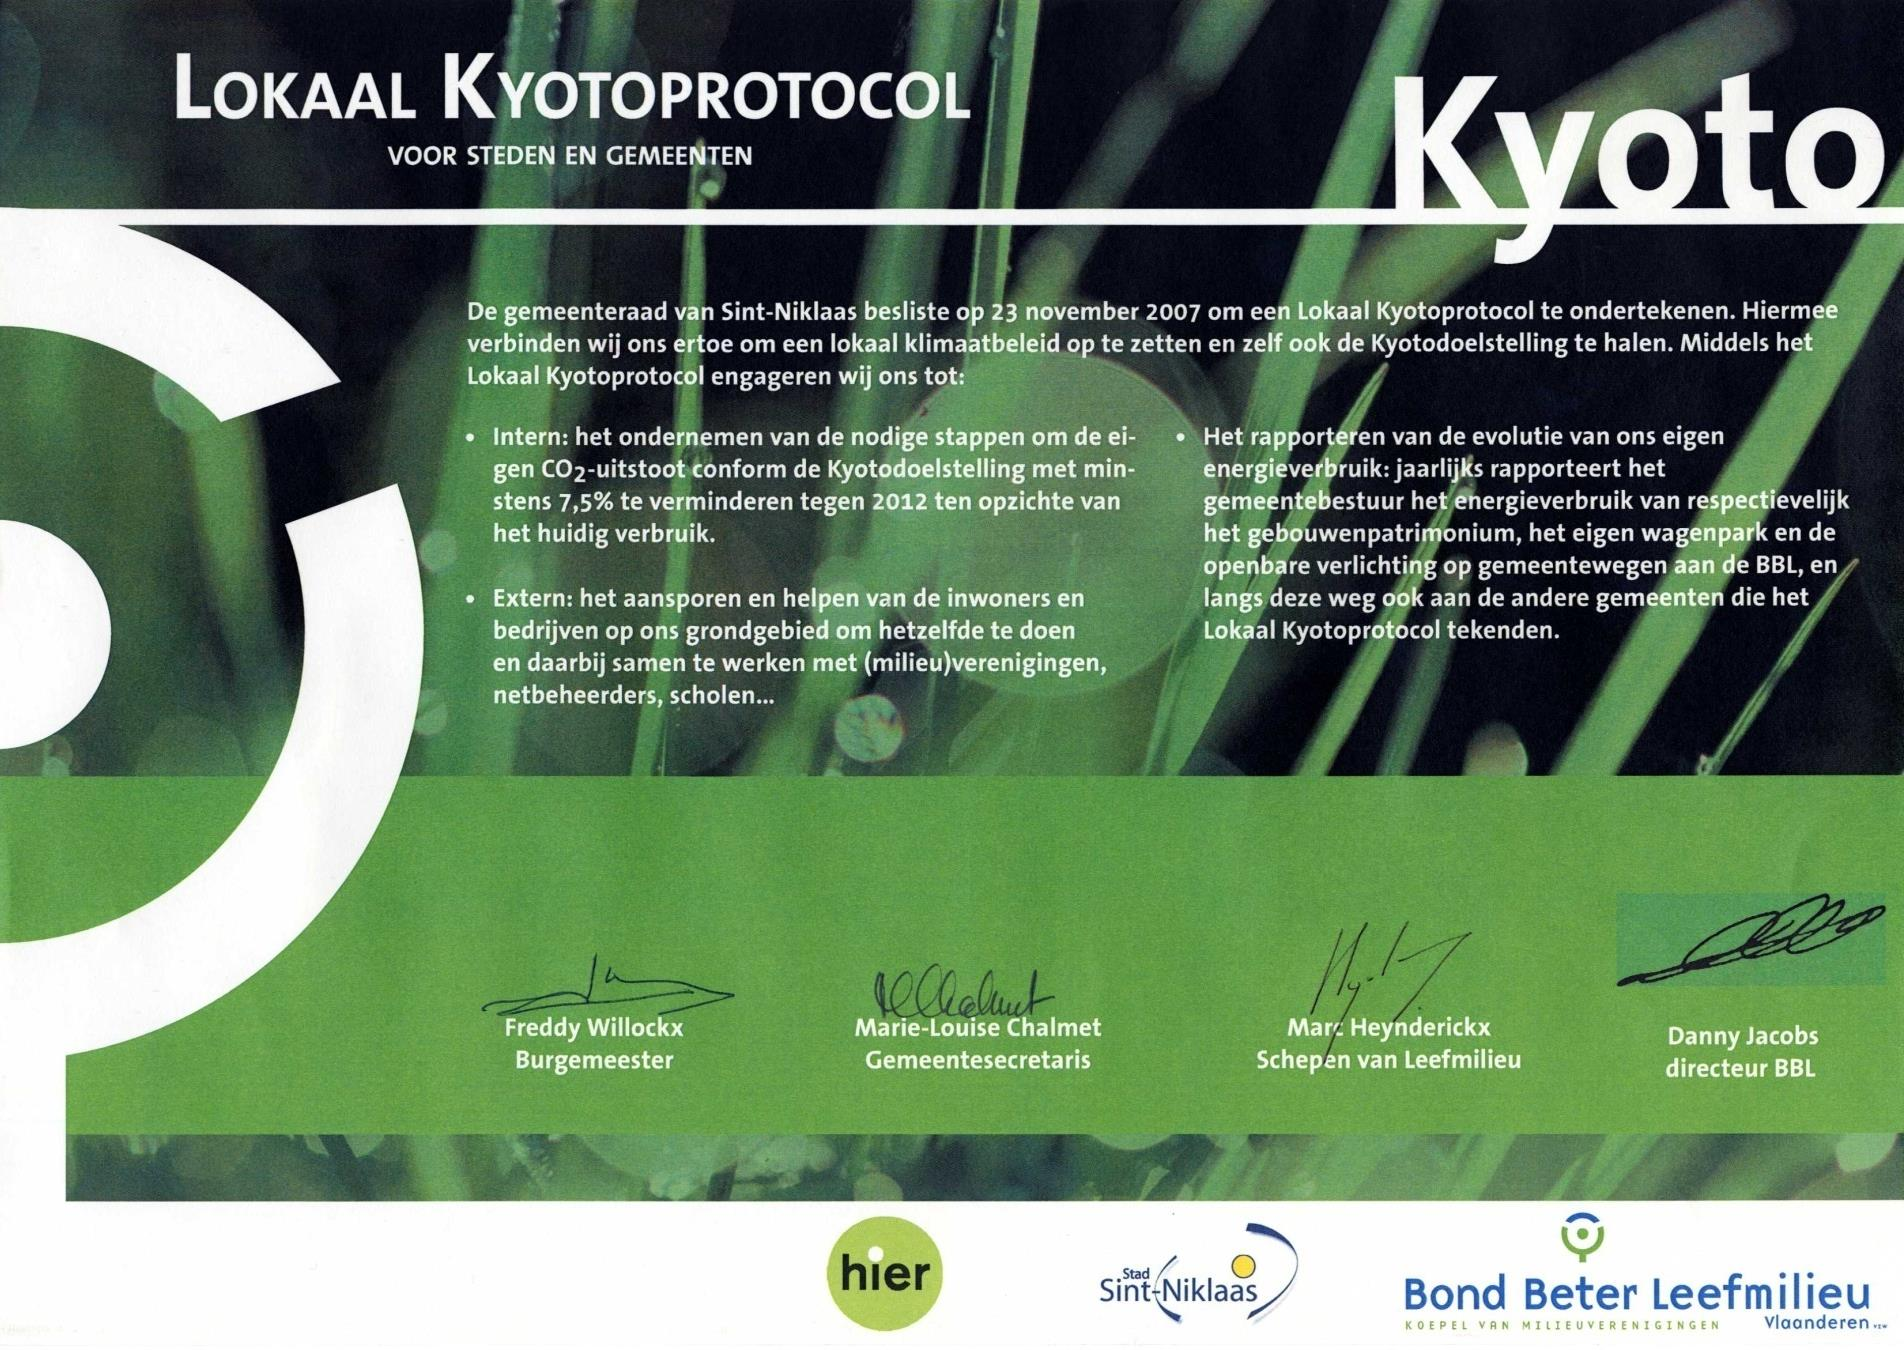 Kyoto-protocol